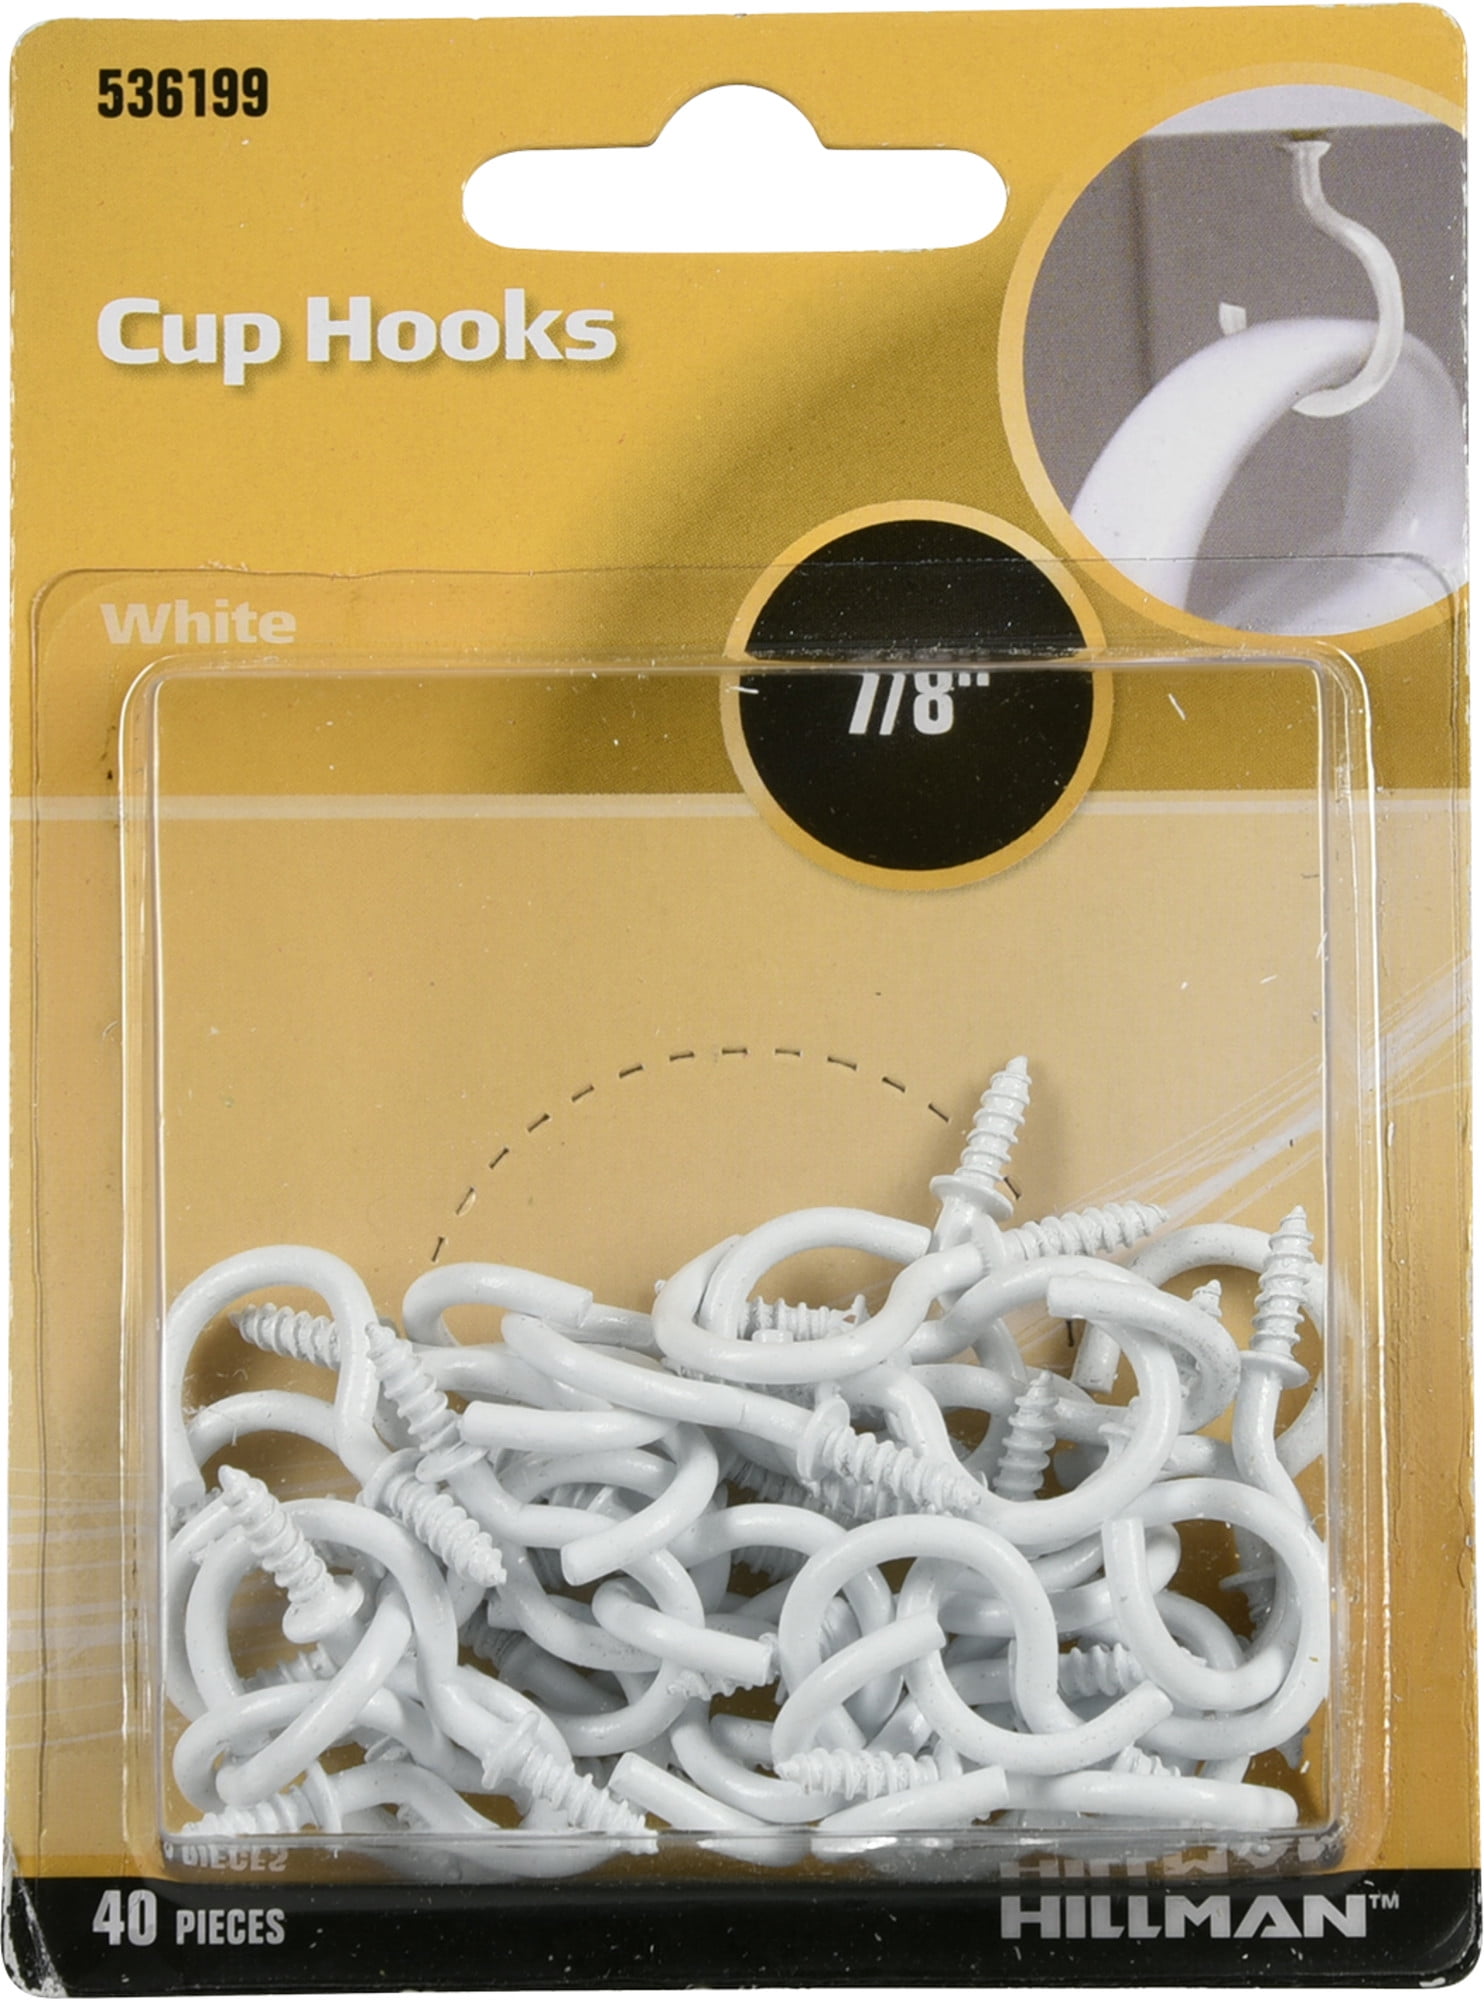 Dresser Square Cup Hook White Plastic Coated Screw In Mug Hanger Kitchen  Tool